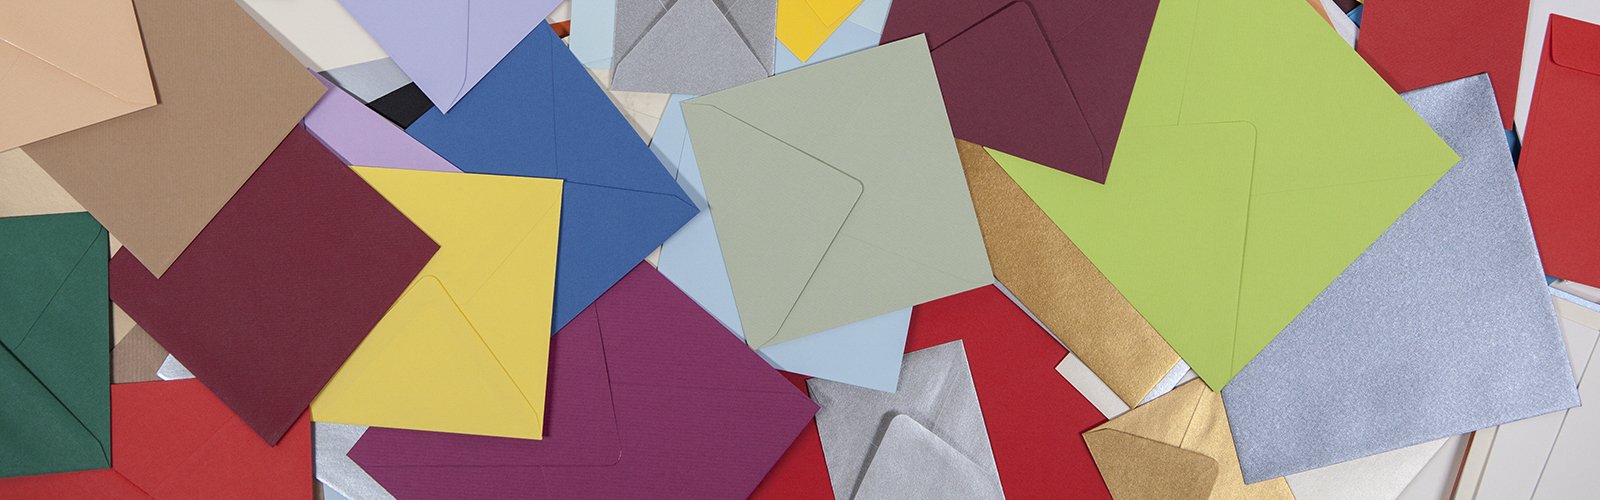 Quadratische farbige Kuverts